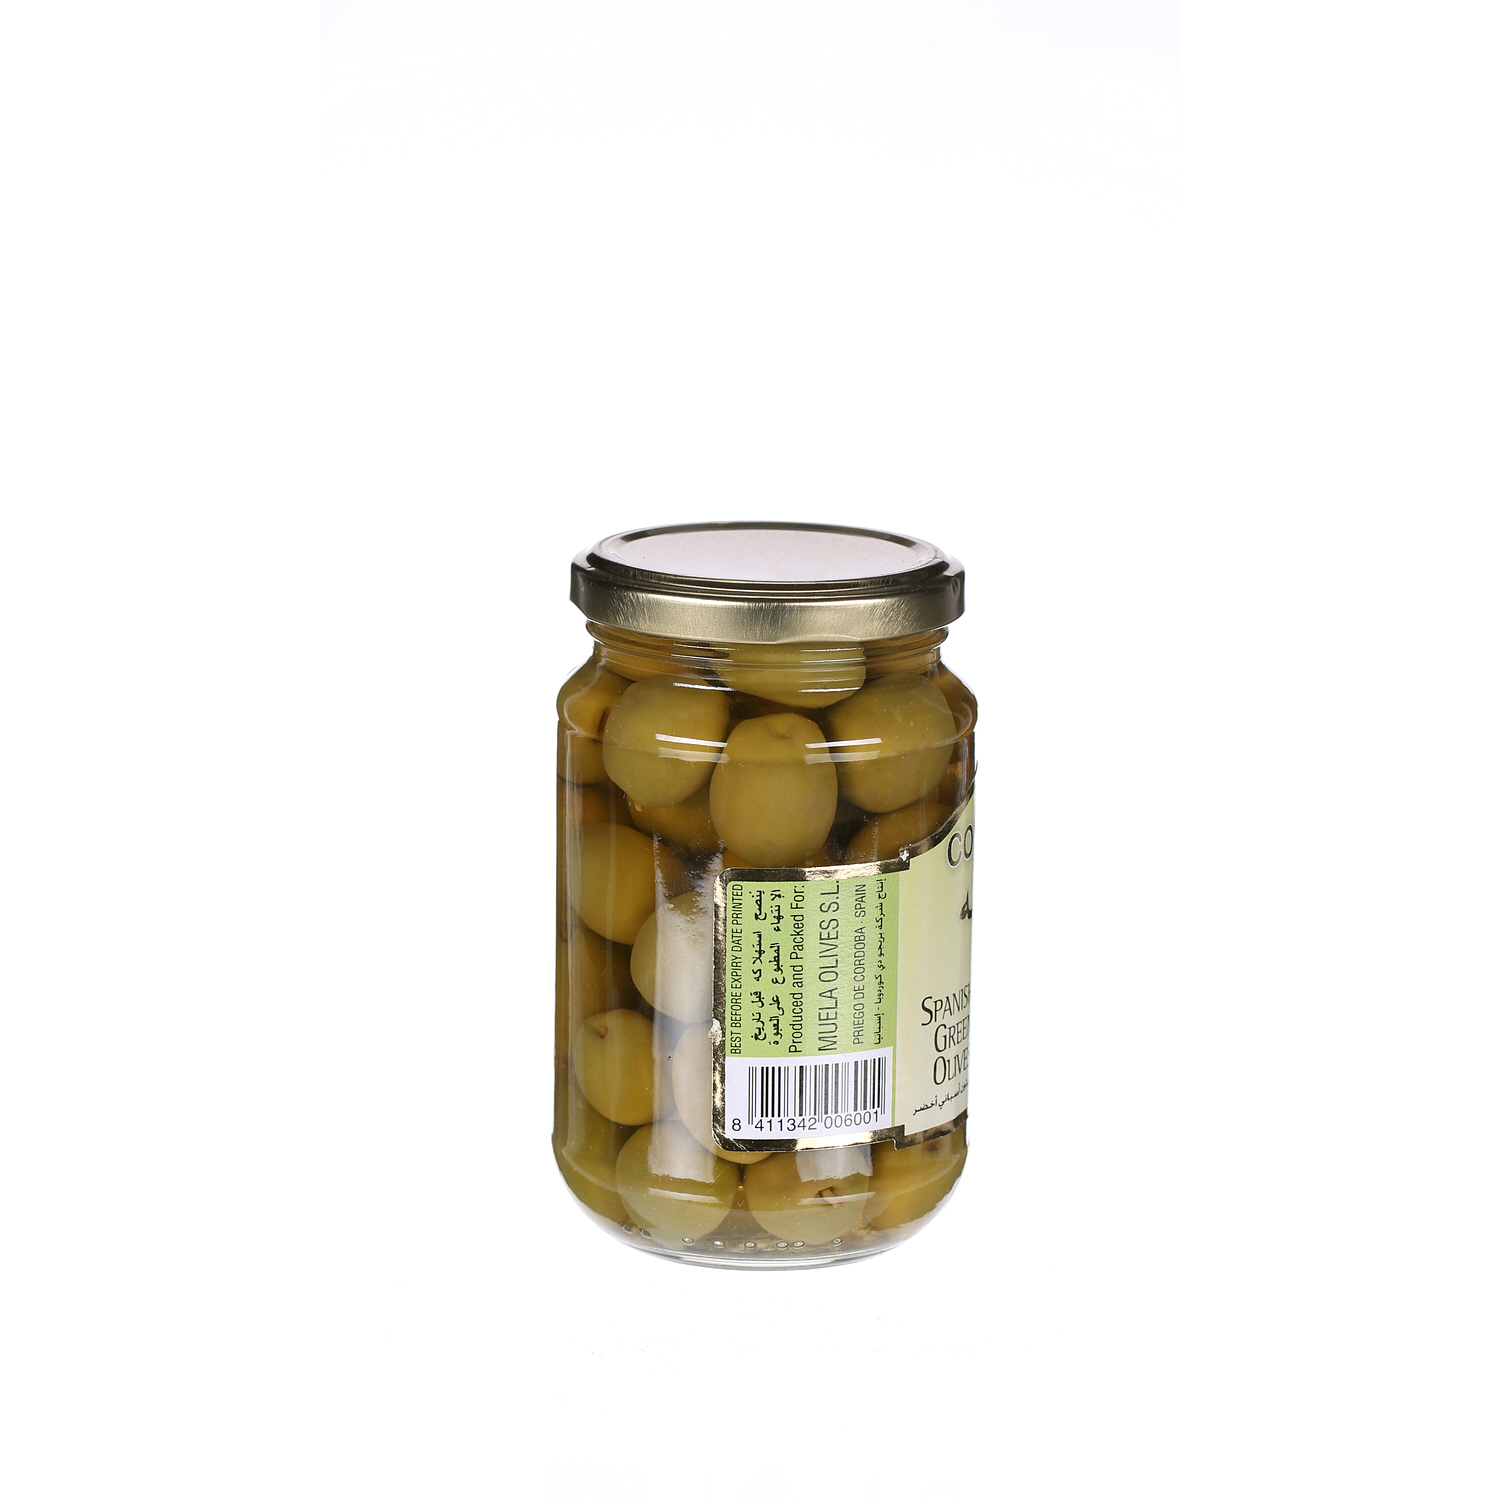 Cordoba Spanish Green Olives 200 g